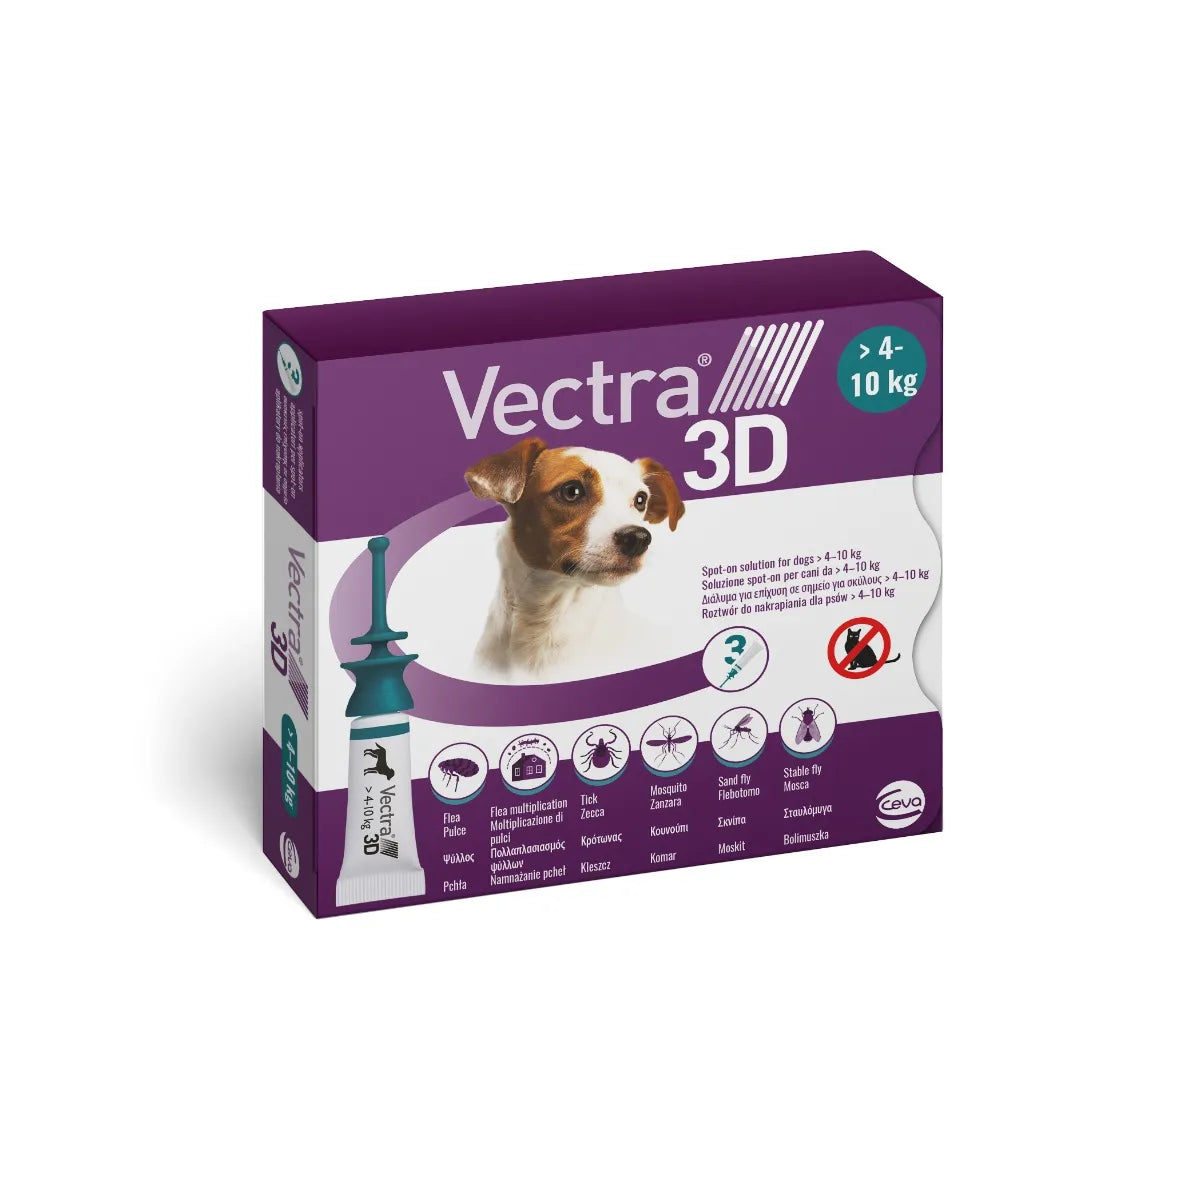 Vectra 3D Spot-On - Antiparassitario per cane da 4 a 10Kg - 3 pipette da 1,6ml